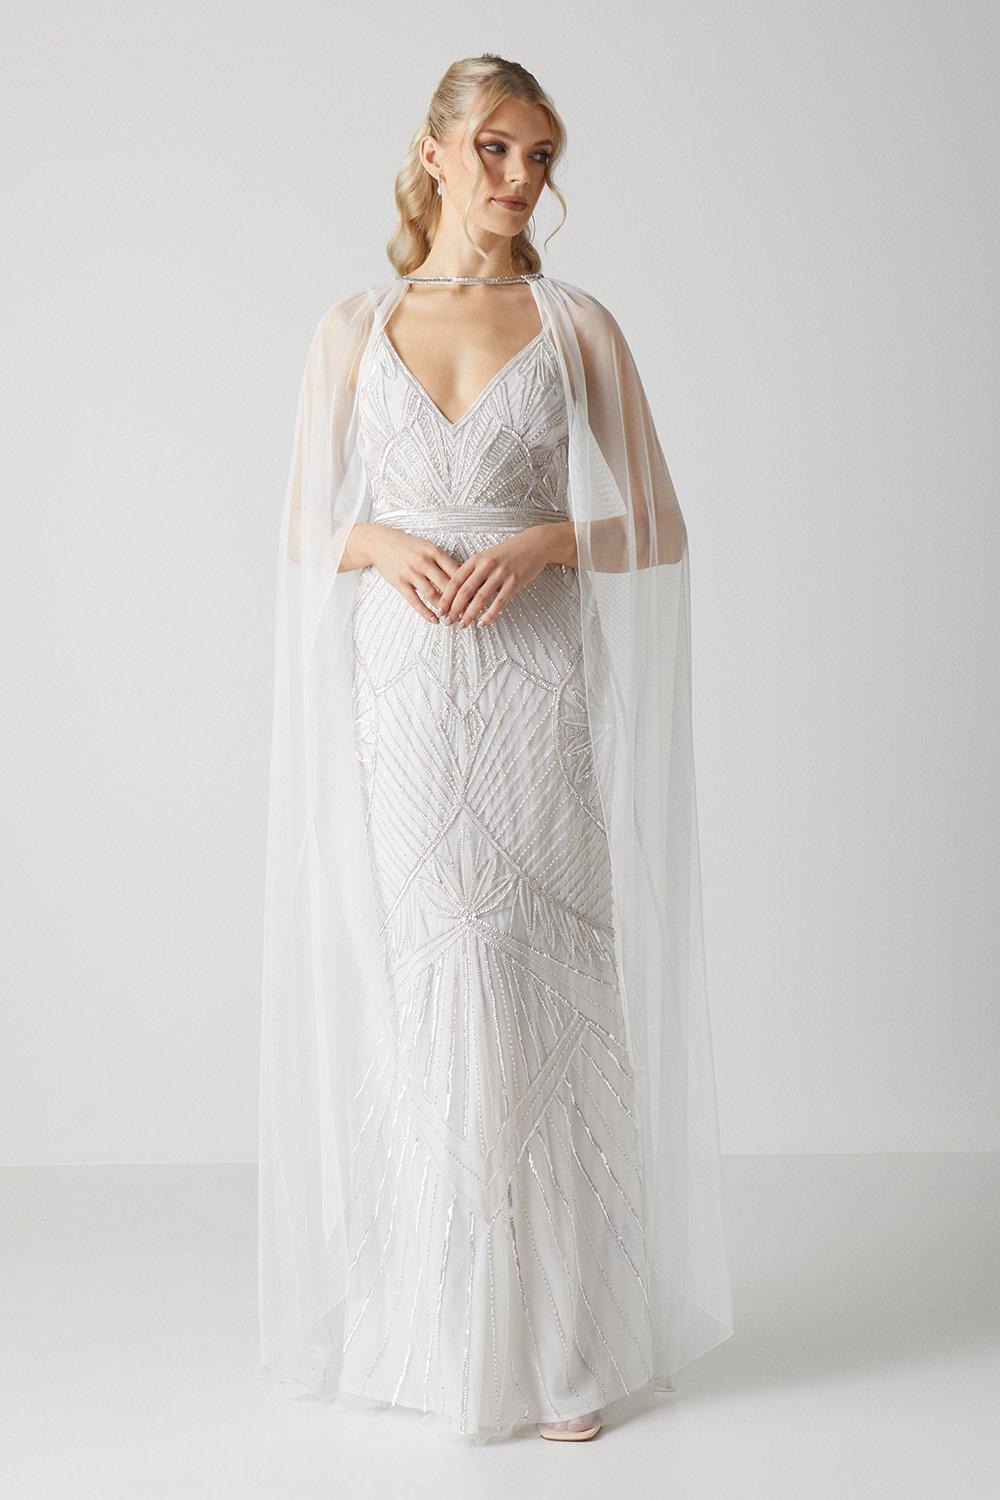 Premium Mesh Bridal Cape With Embellished Trim - Ivory